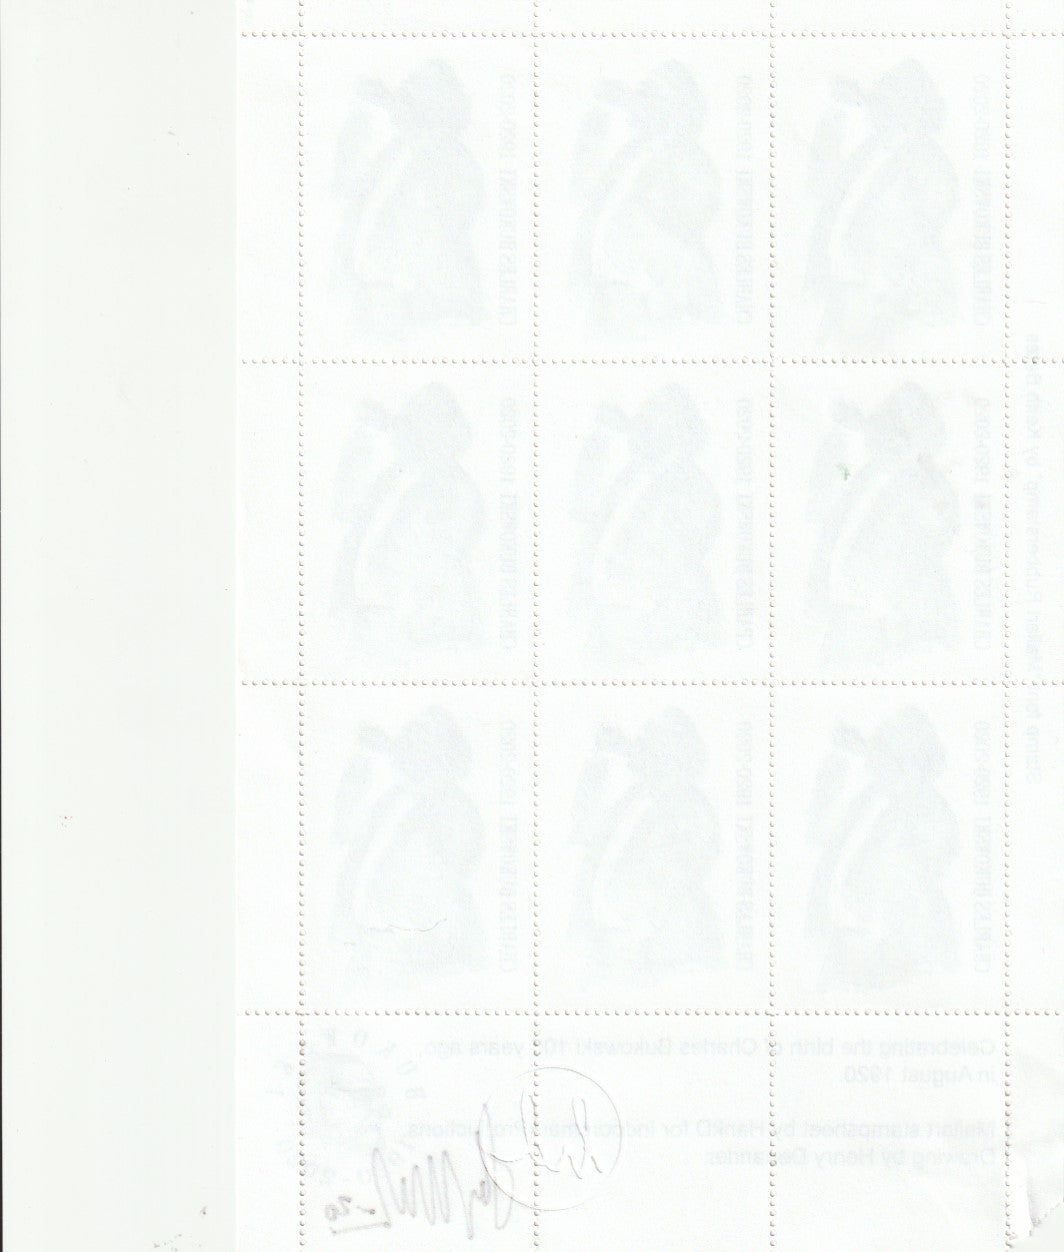 Bukowski Commemorative Stamps From Sweden